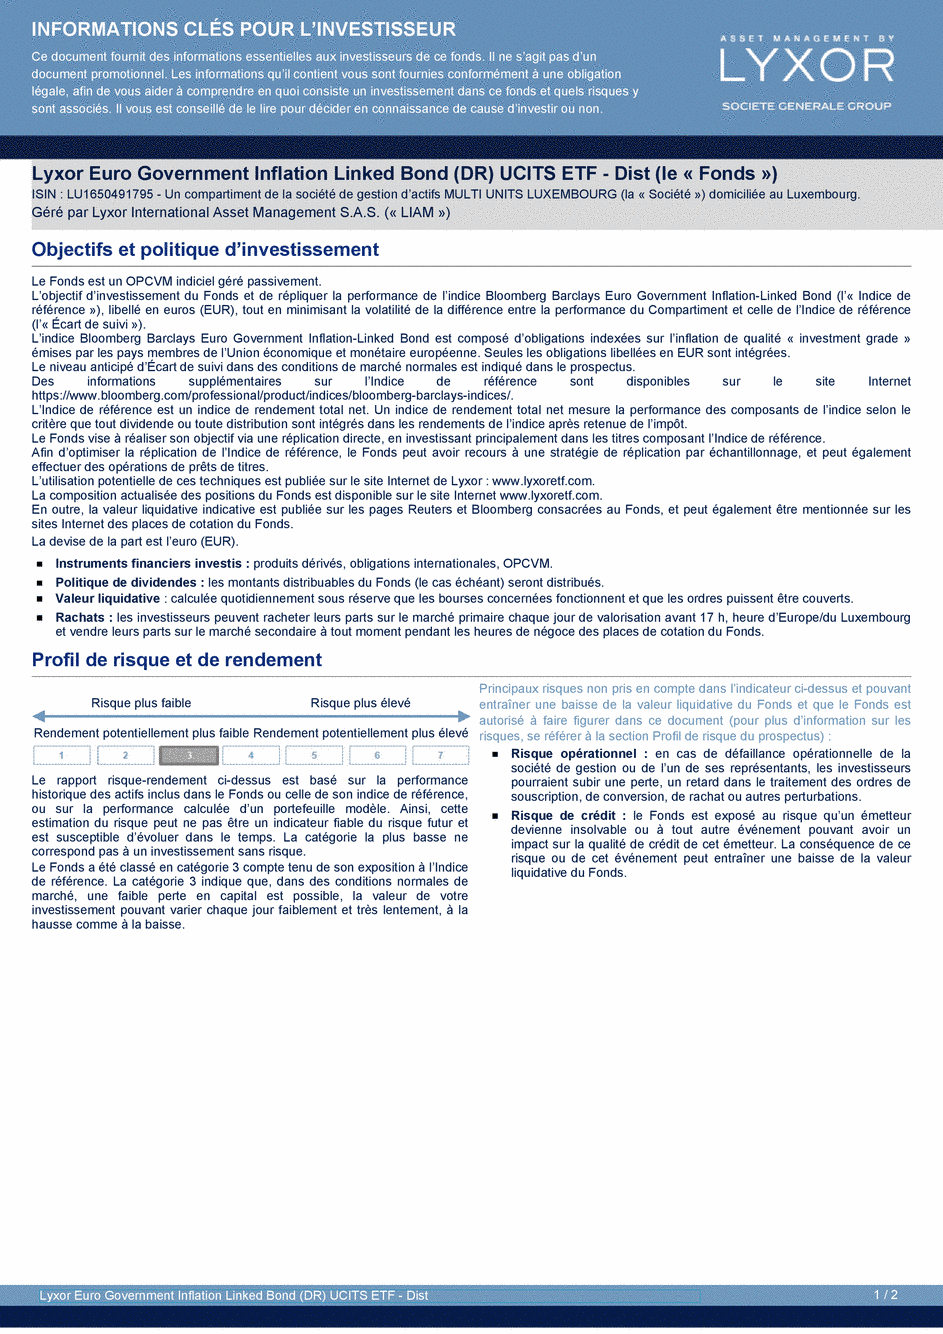 DICI Lyxor Core Euro Government Inflation-Linked Bond (DR) UCITS ETF - Dist - 15/05/2020 - Français